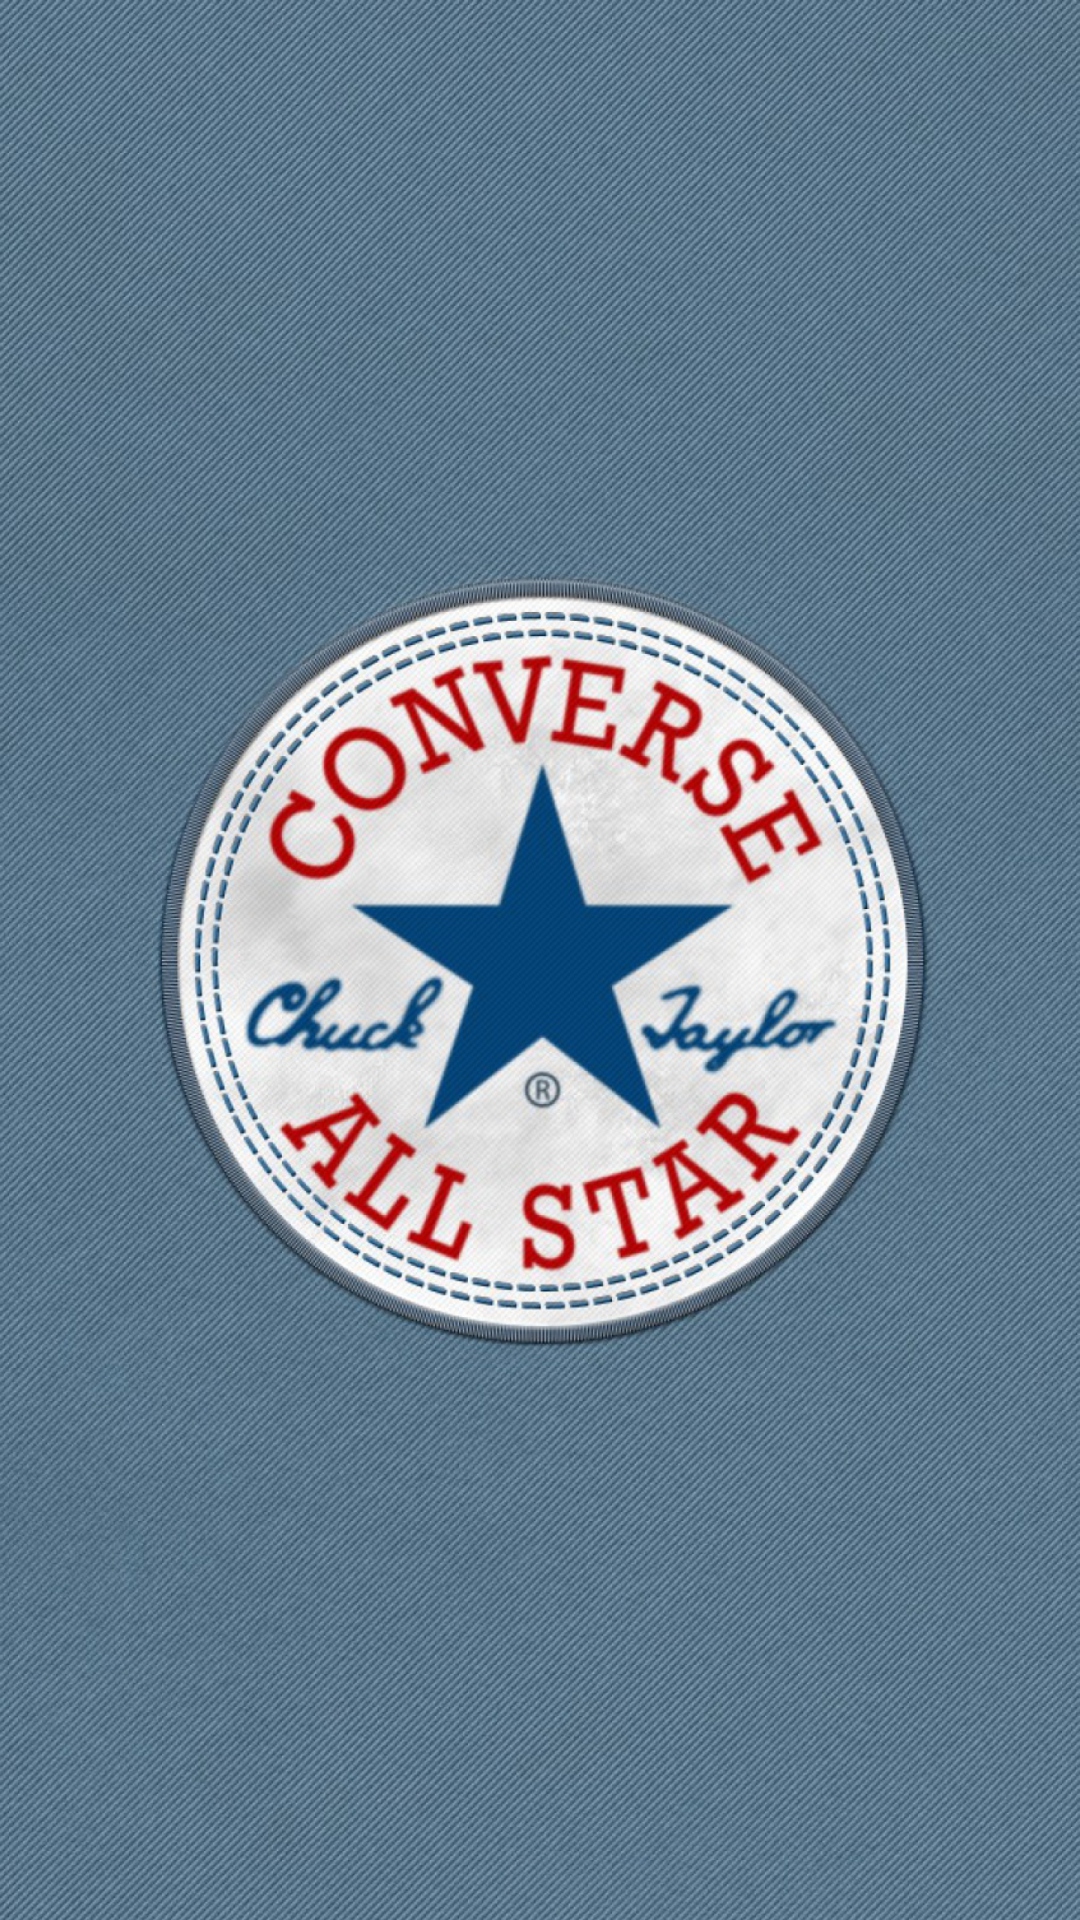 Converse All Stars wallpaper 1080x1920